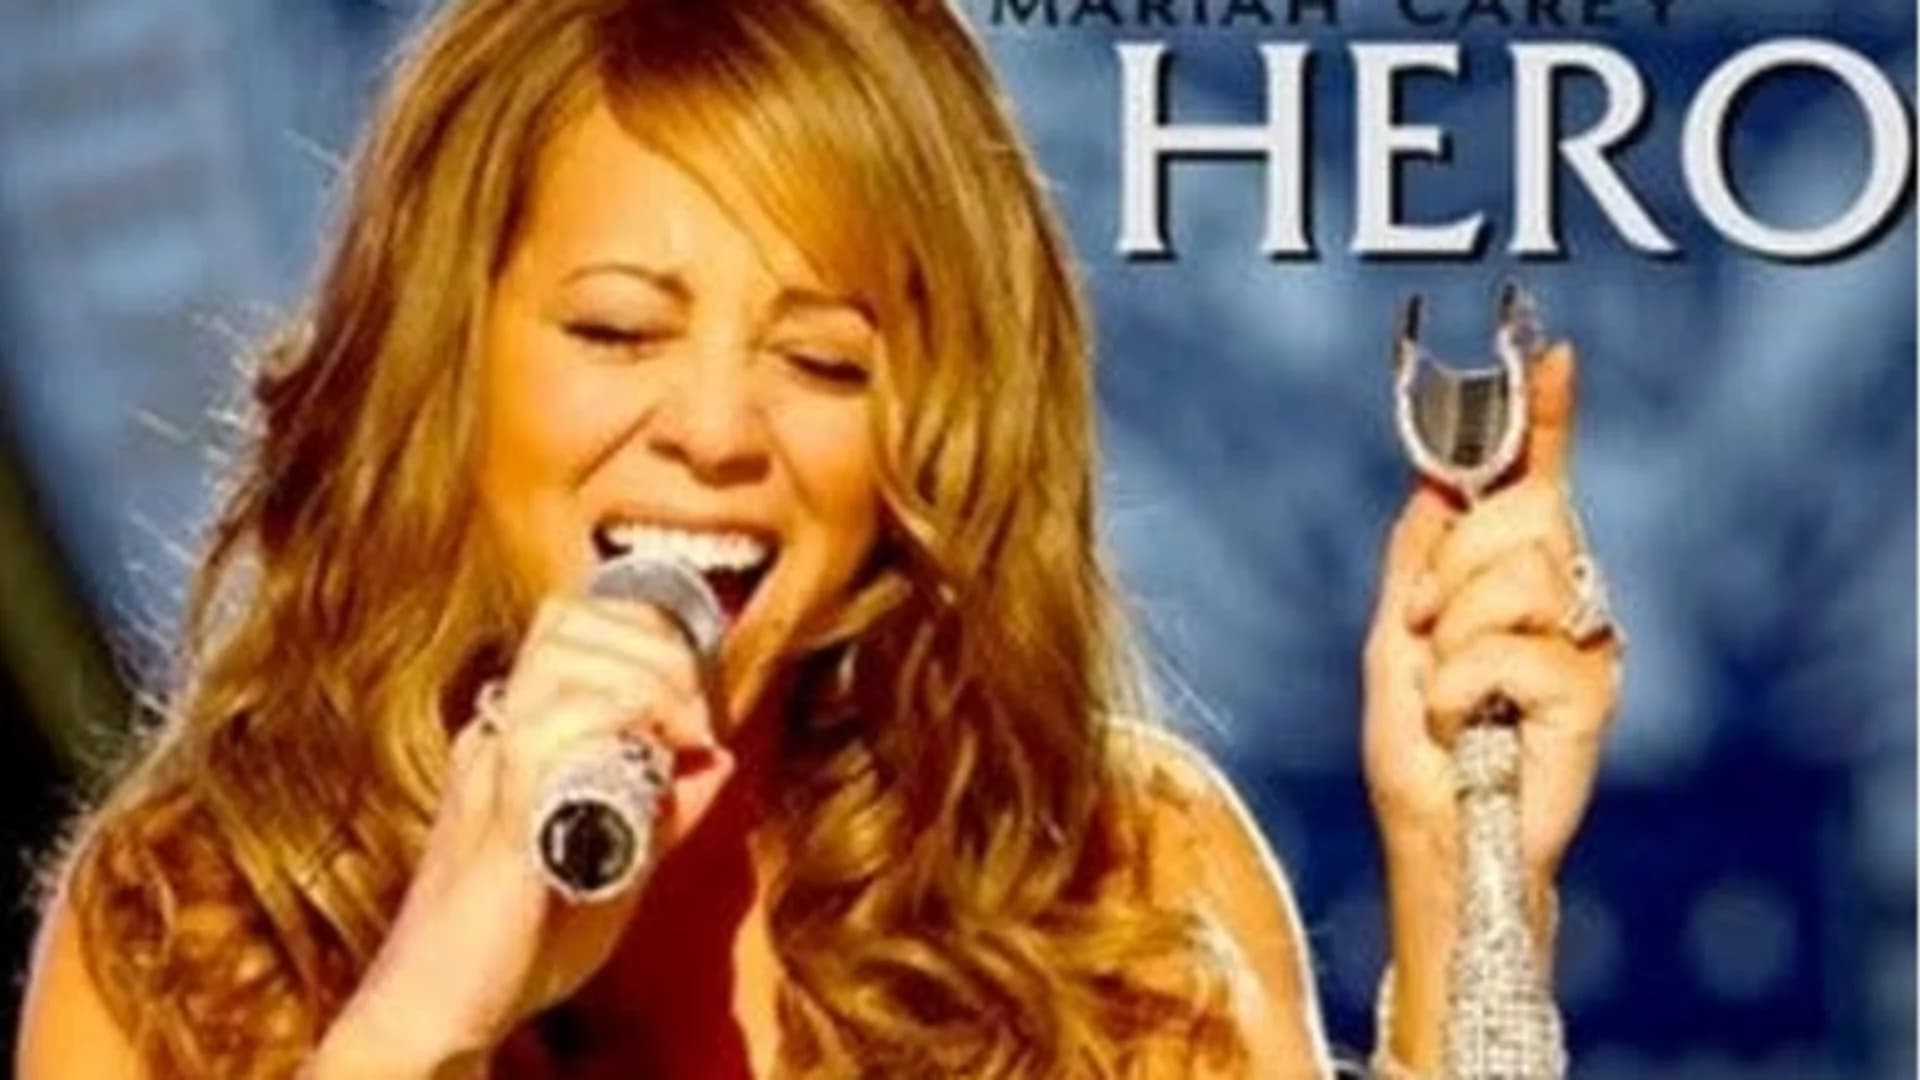 Doctor from Mariah Carey’s LI hometown asks for serenade of ‘Hero’